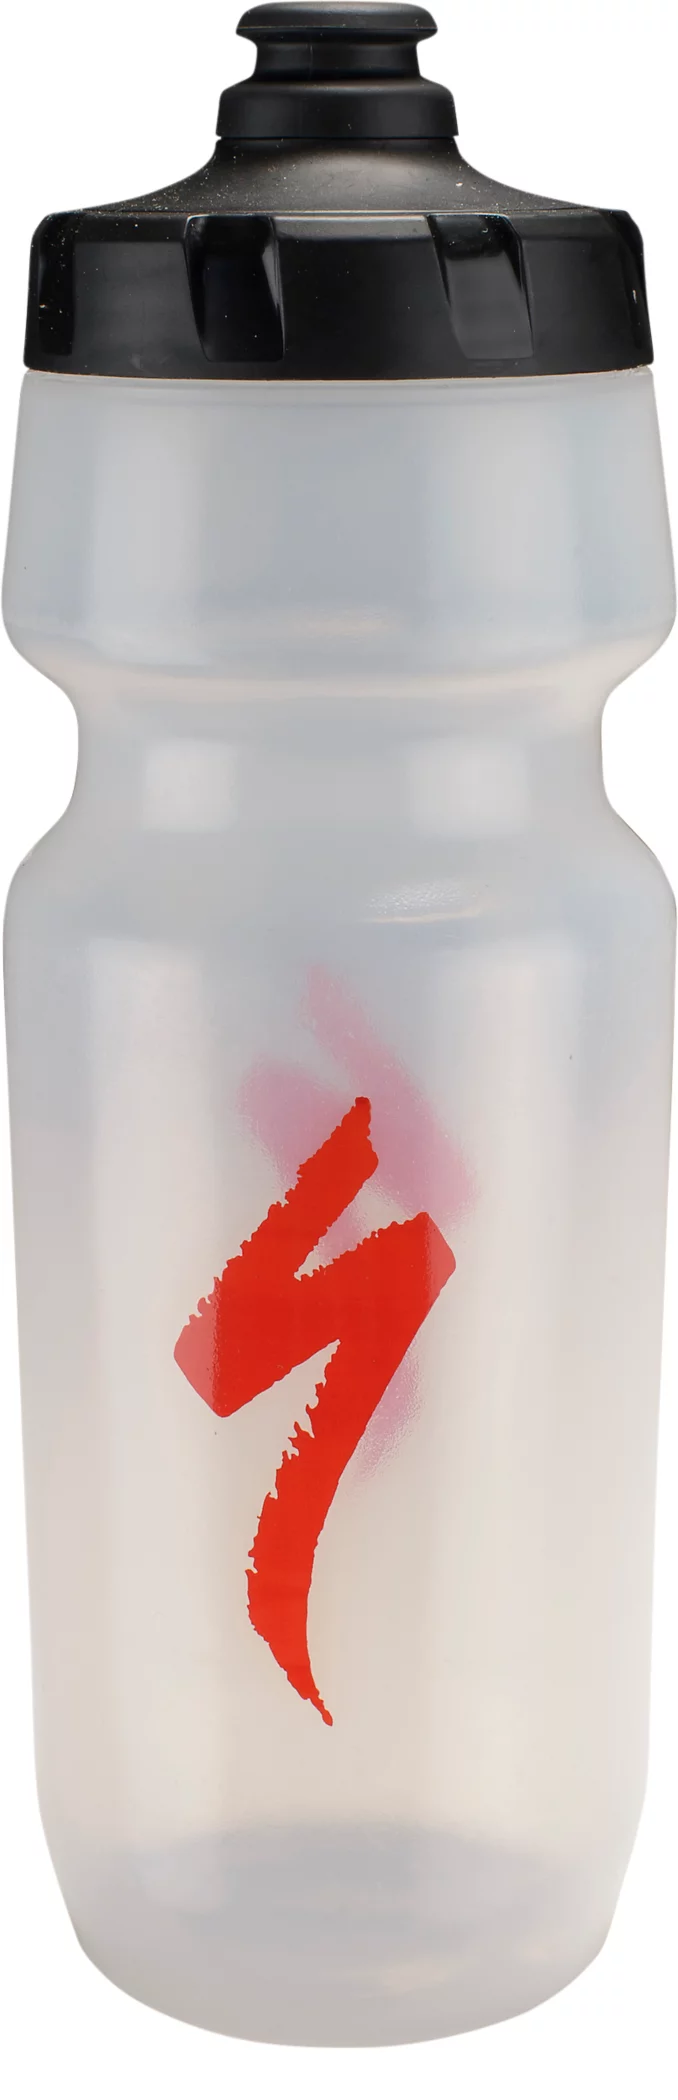 Big_Mouth_24oz_Water_Bottle-_S-Logo